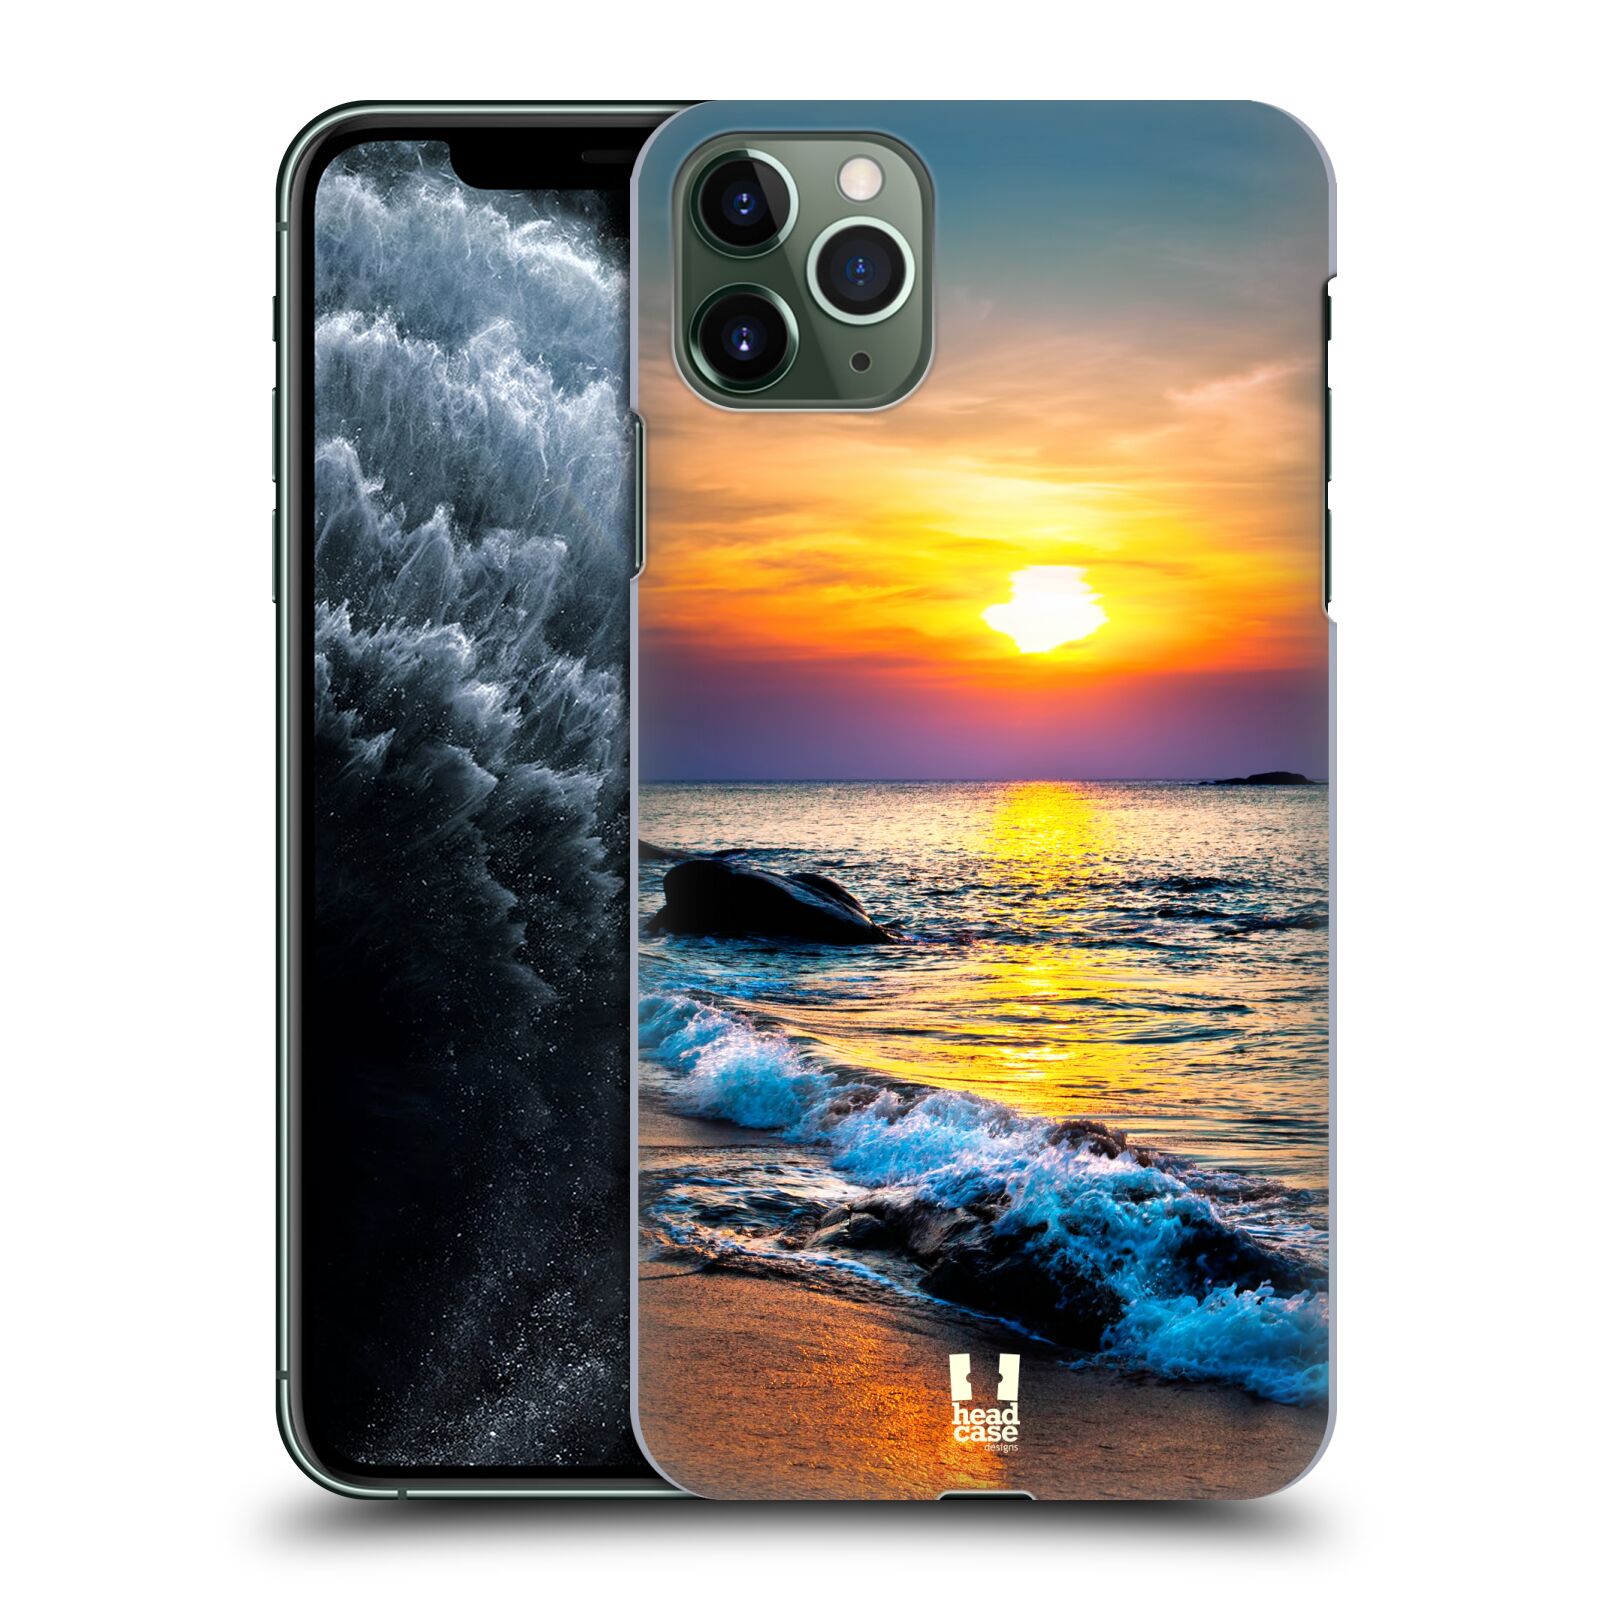 Pouzdro na mobil Apple Iphone 11 PRO MAX - HEAD CASE - vzor Pláže a Moře barevný západ slunce